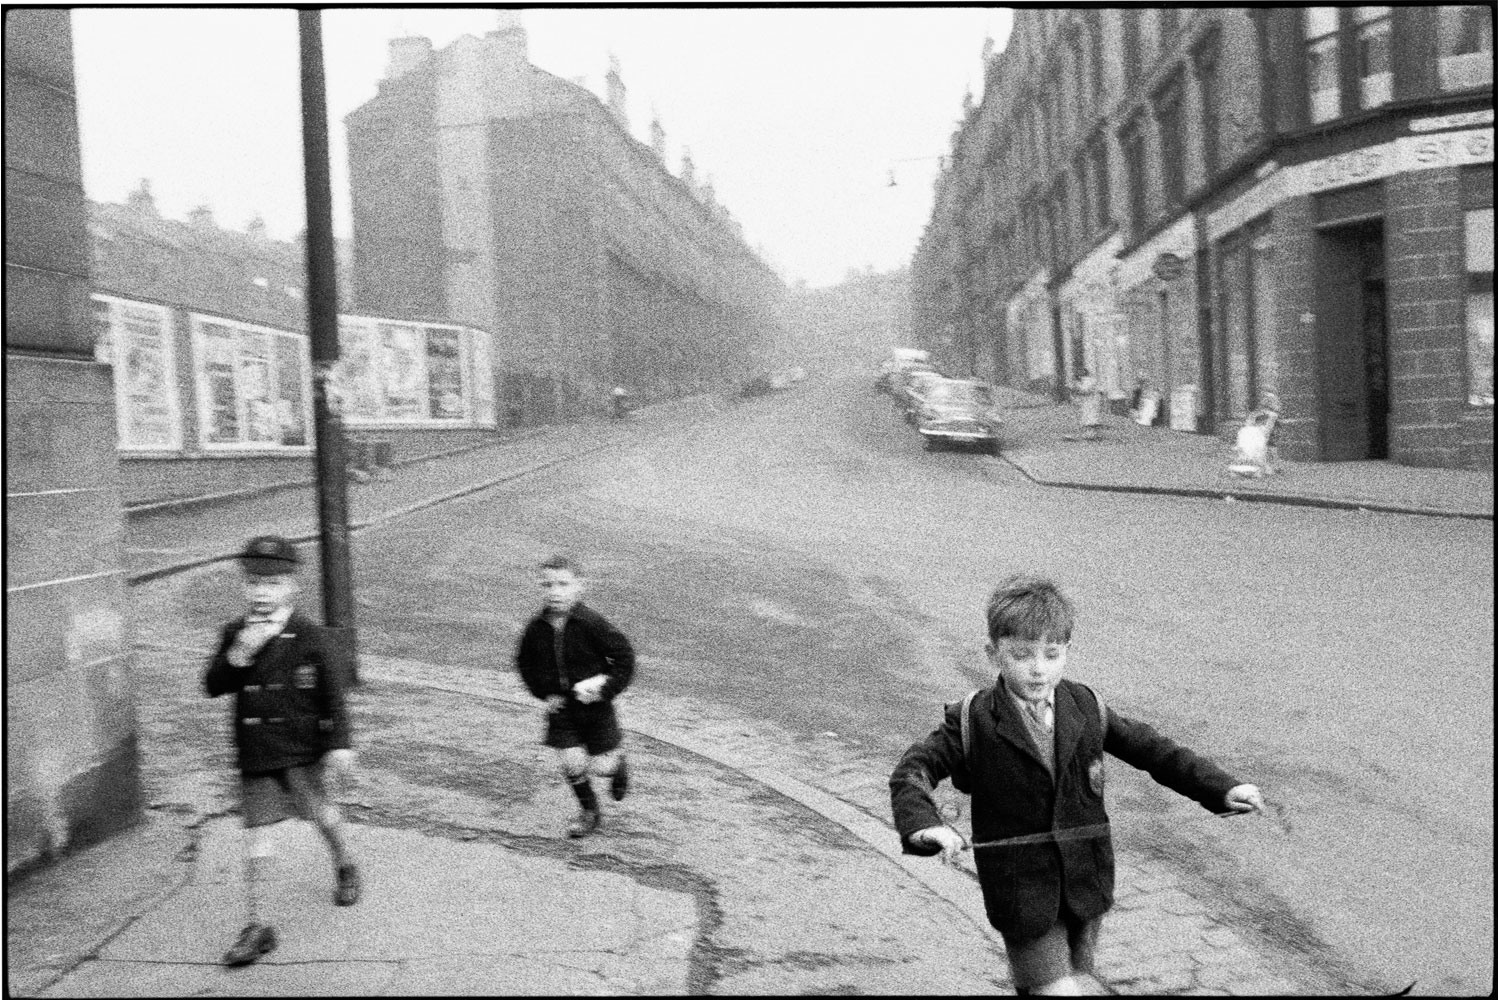 Bruce Davidson, England/Scotland, 1960